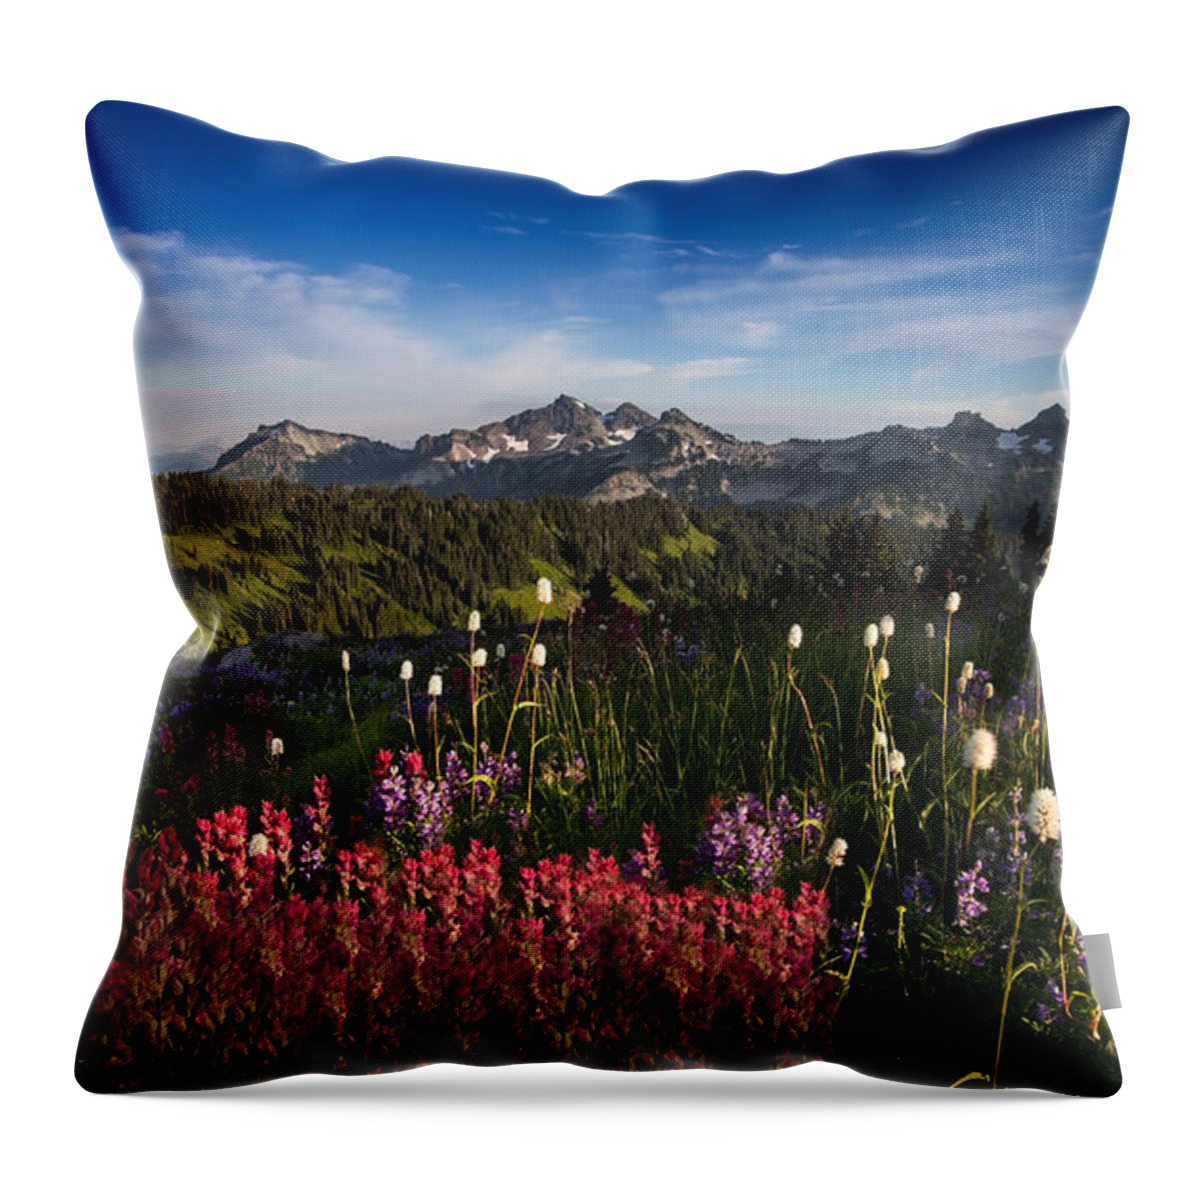 Mt. Rainier Throw Pillow featuring the photograph Tatoosh Mountain Range by Larry Marshall